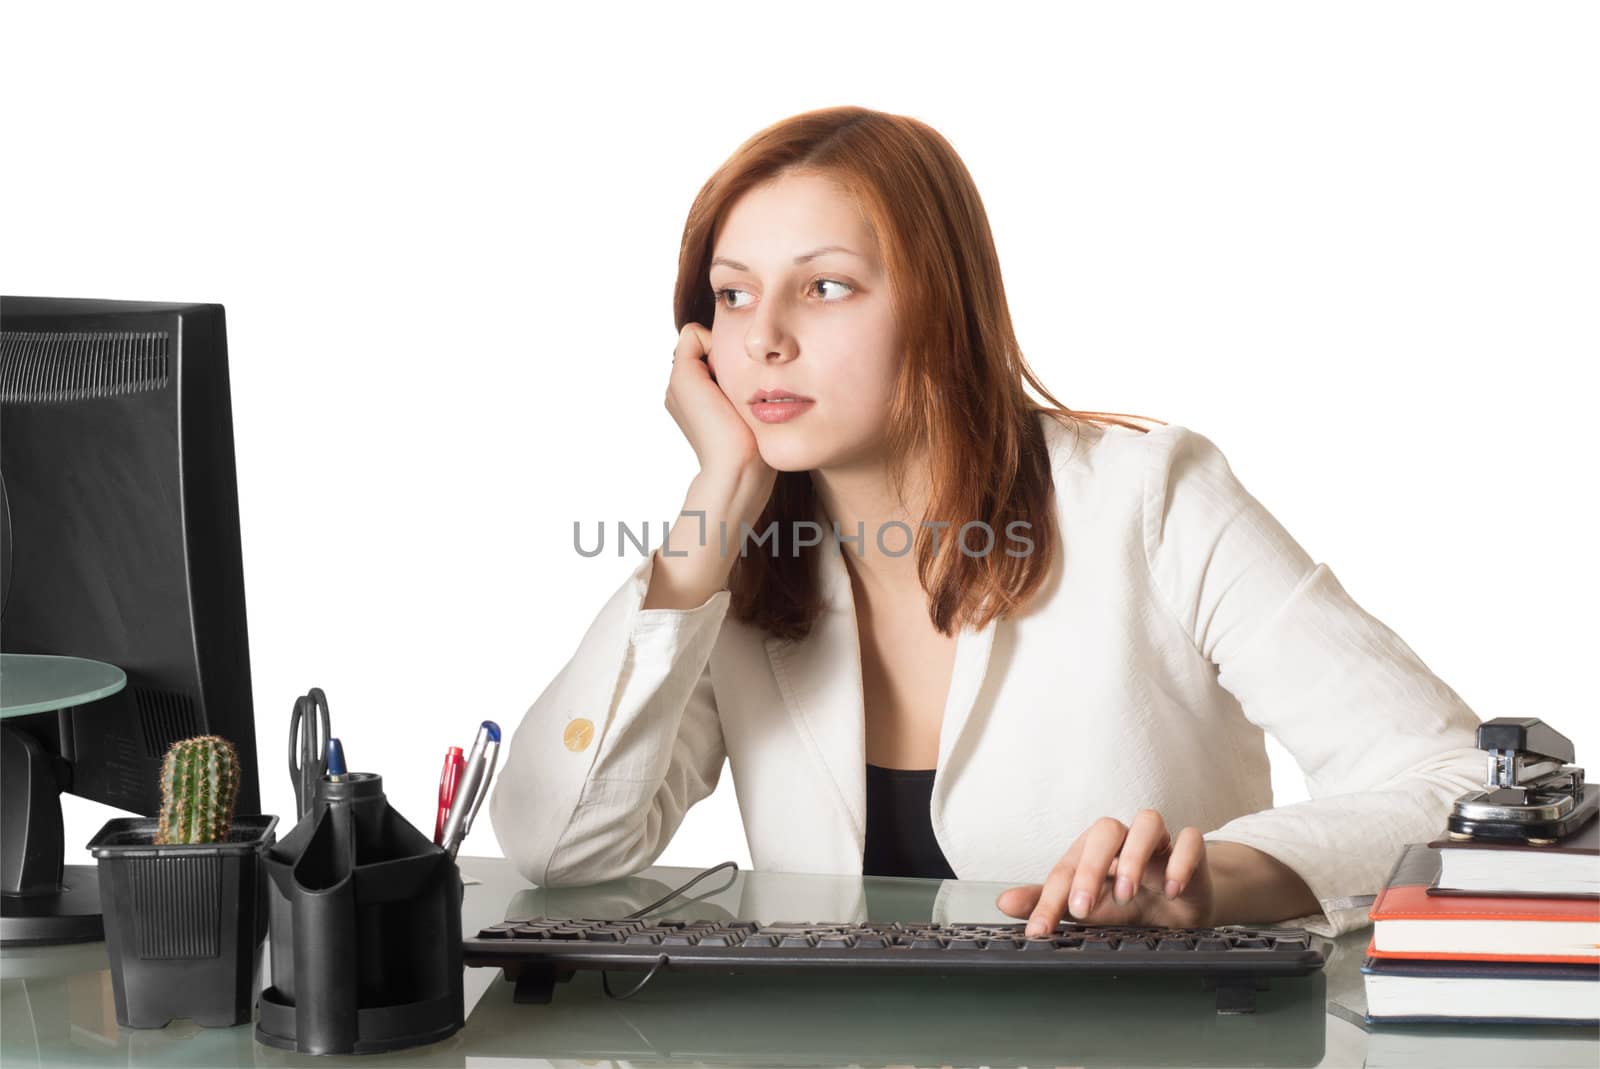 Secretary female typing on a computer keyboard  by gurin_oleksandr